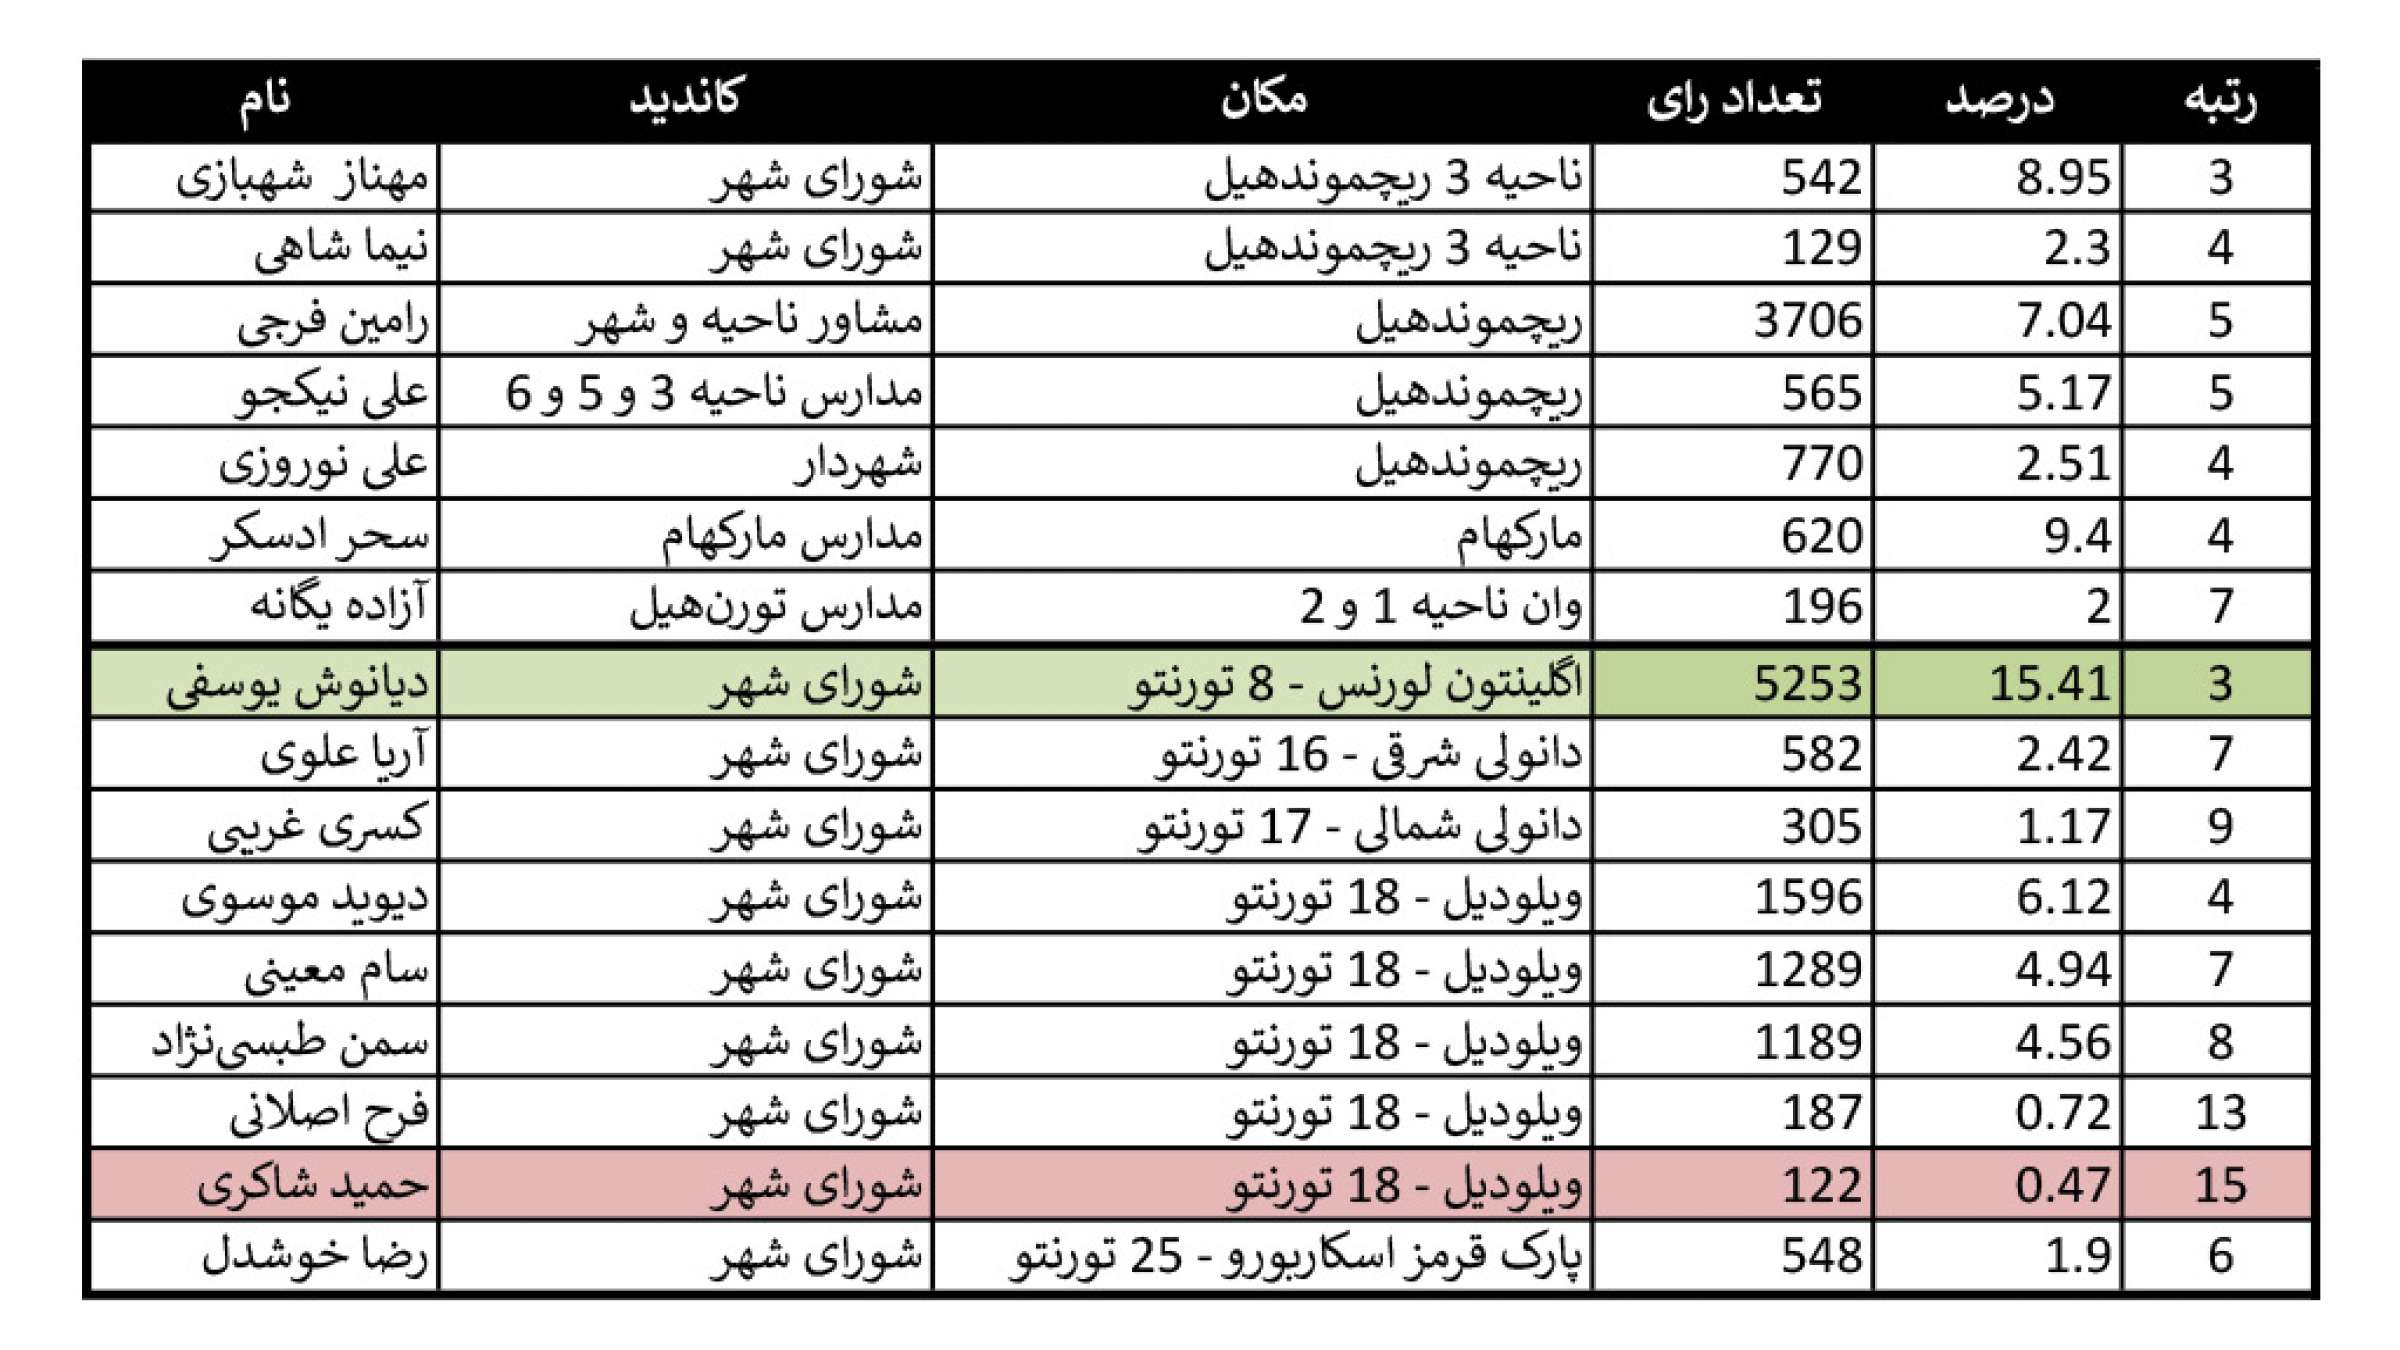 saeed-soltanpour-city-iranians-chart